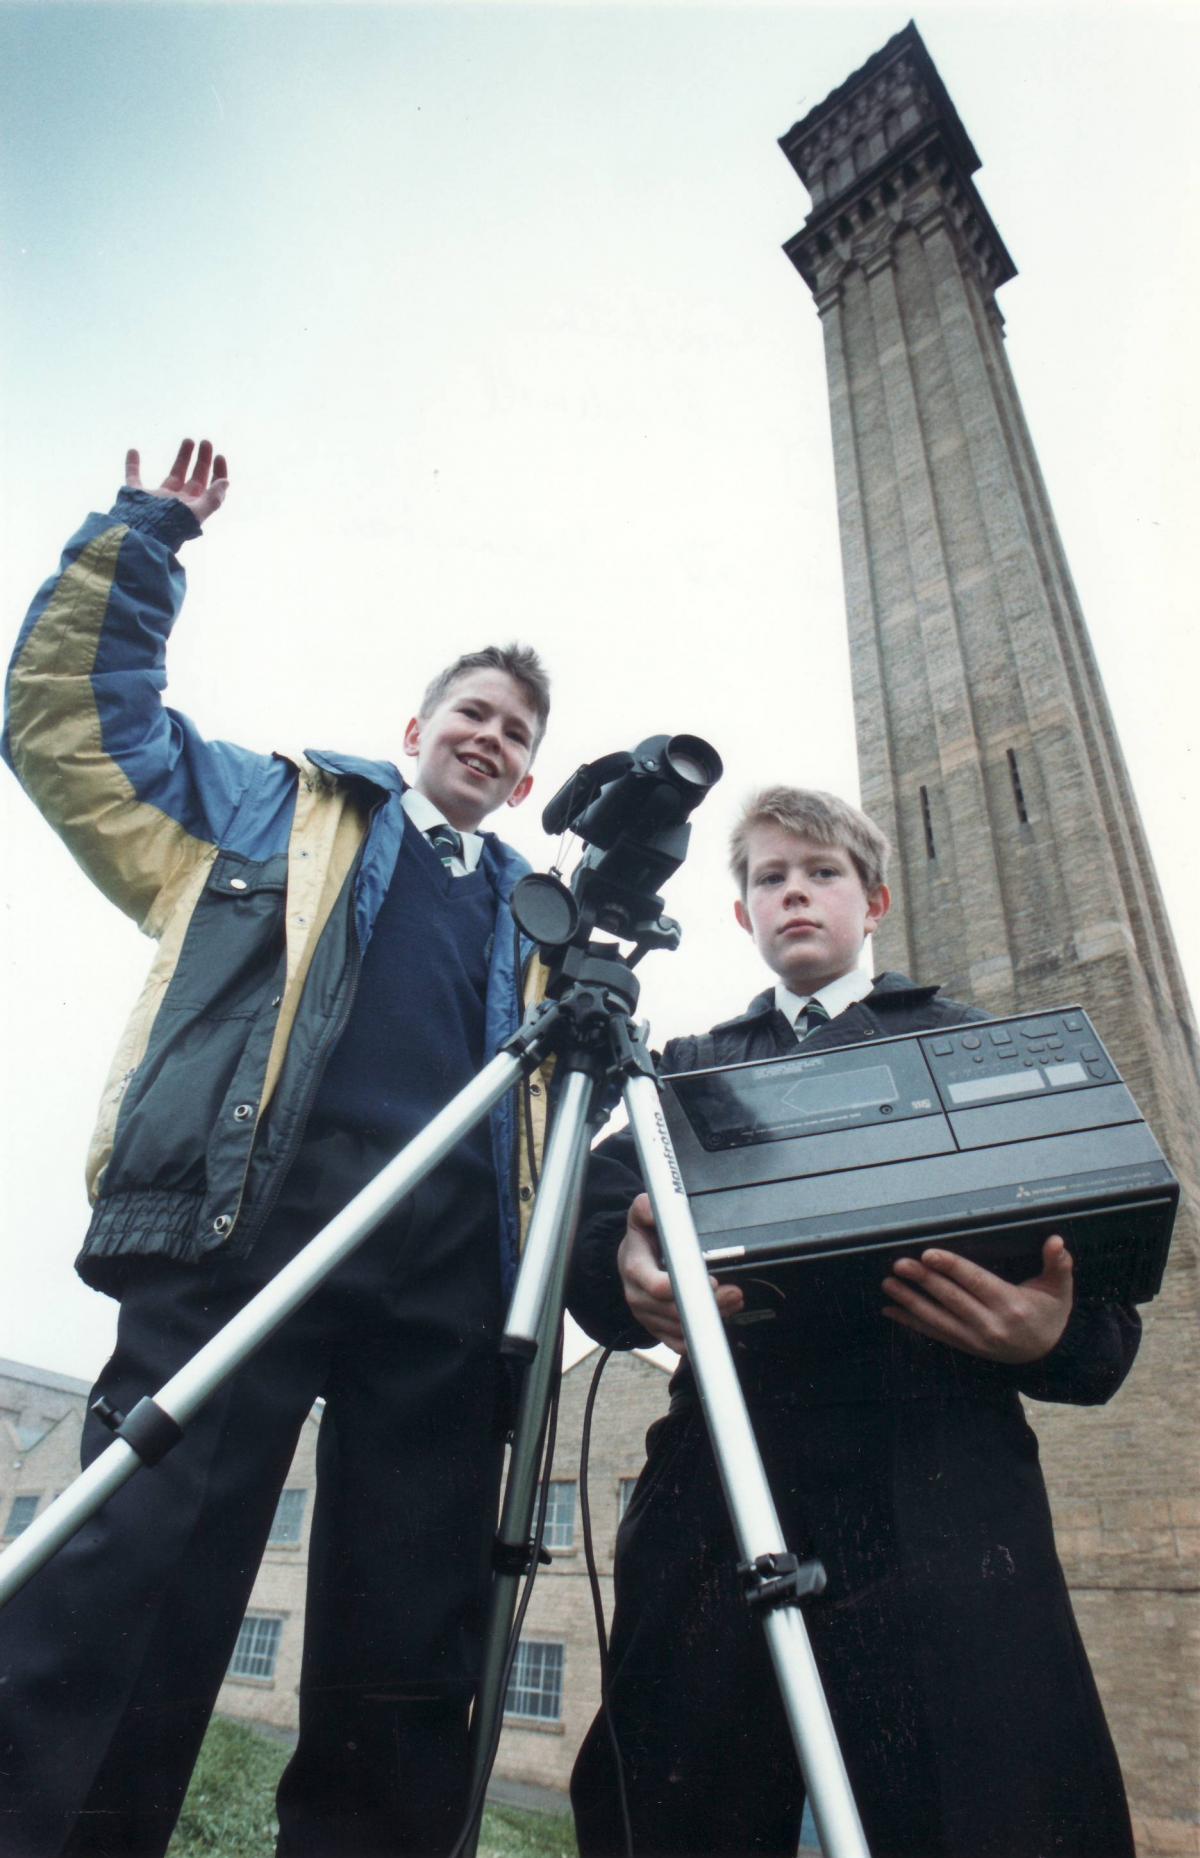 Thornton Upper filming at Manningham Mills, 1991